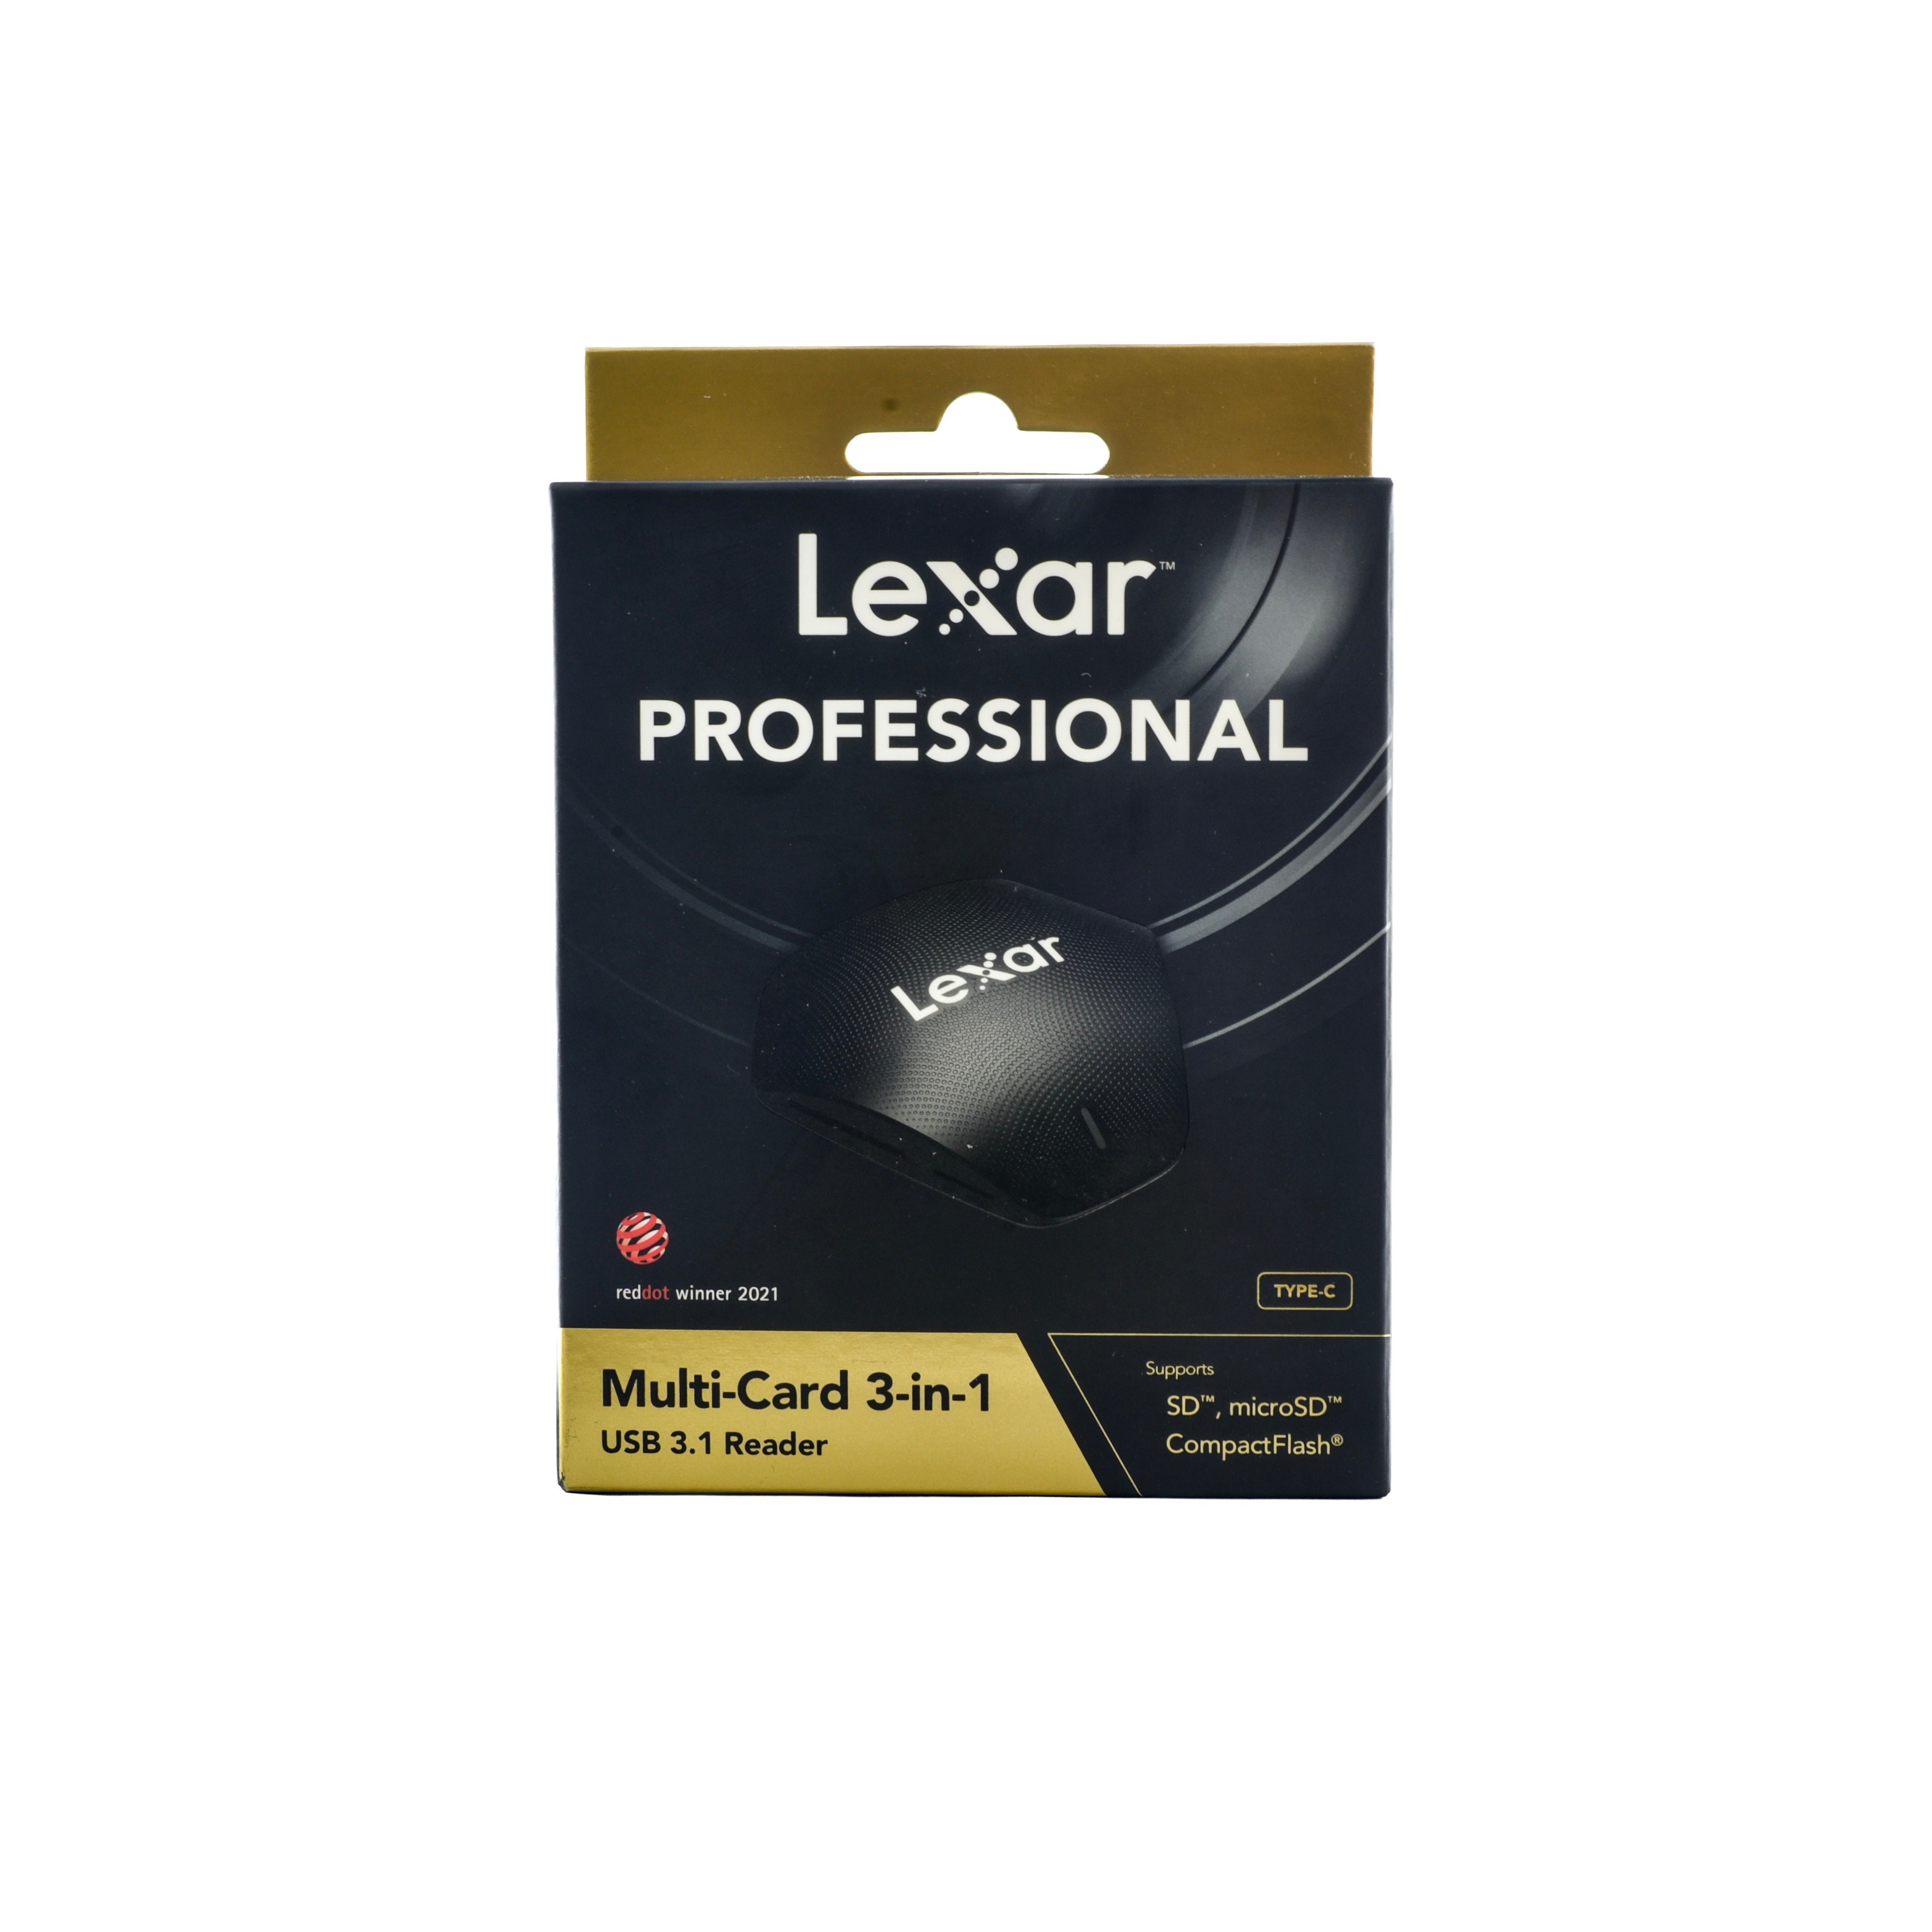 Lexar Professional USB 3.1 (Type C) Dual Slot Card Reader